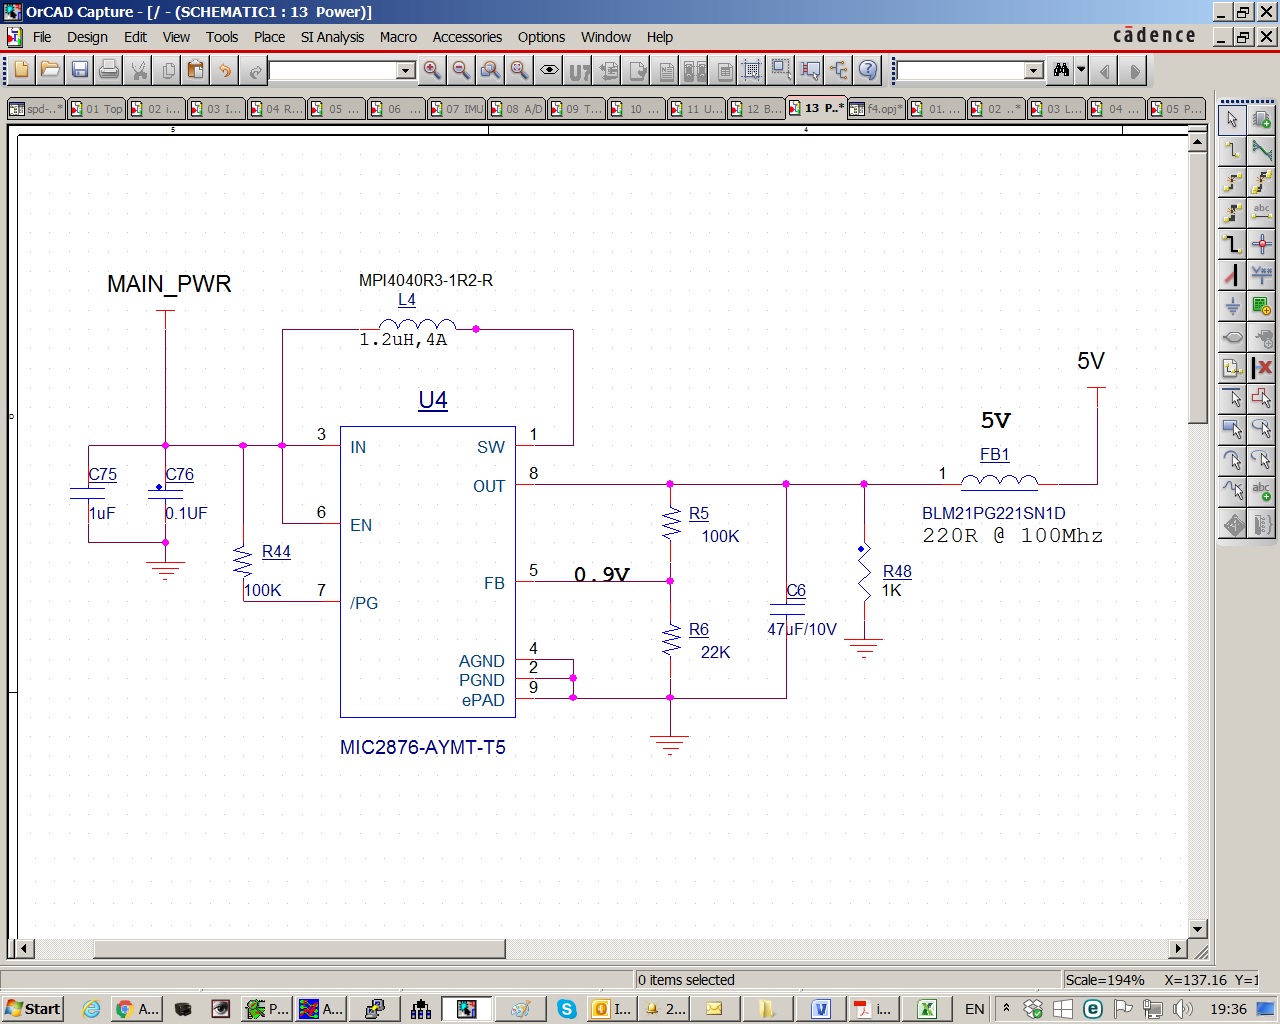 MIC2876-AYMT-T5 regulator problem - Power management forum - Power ...